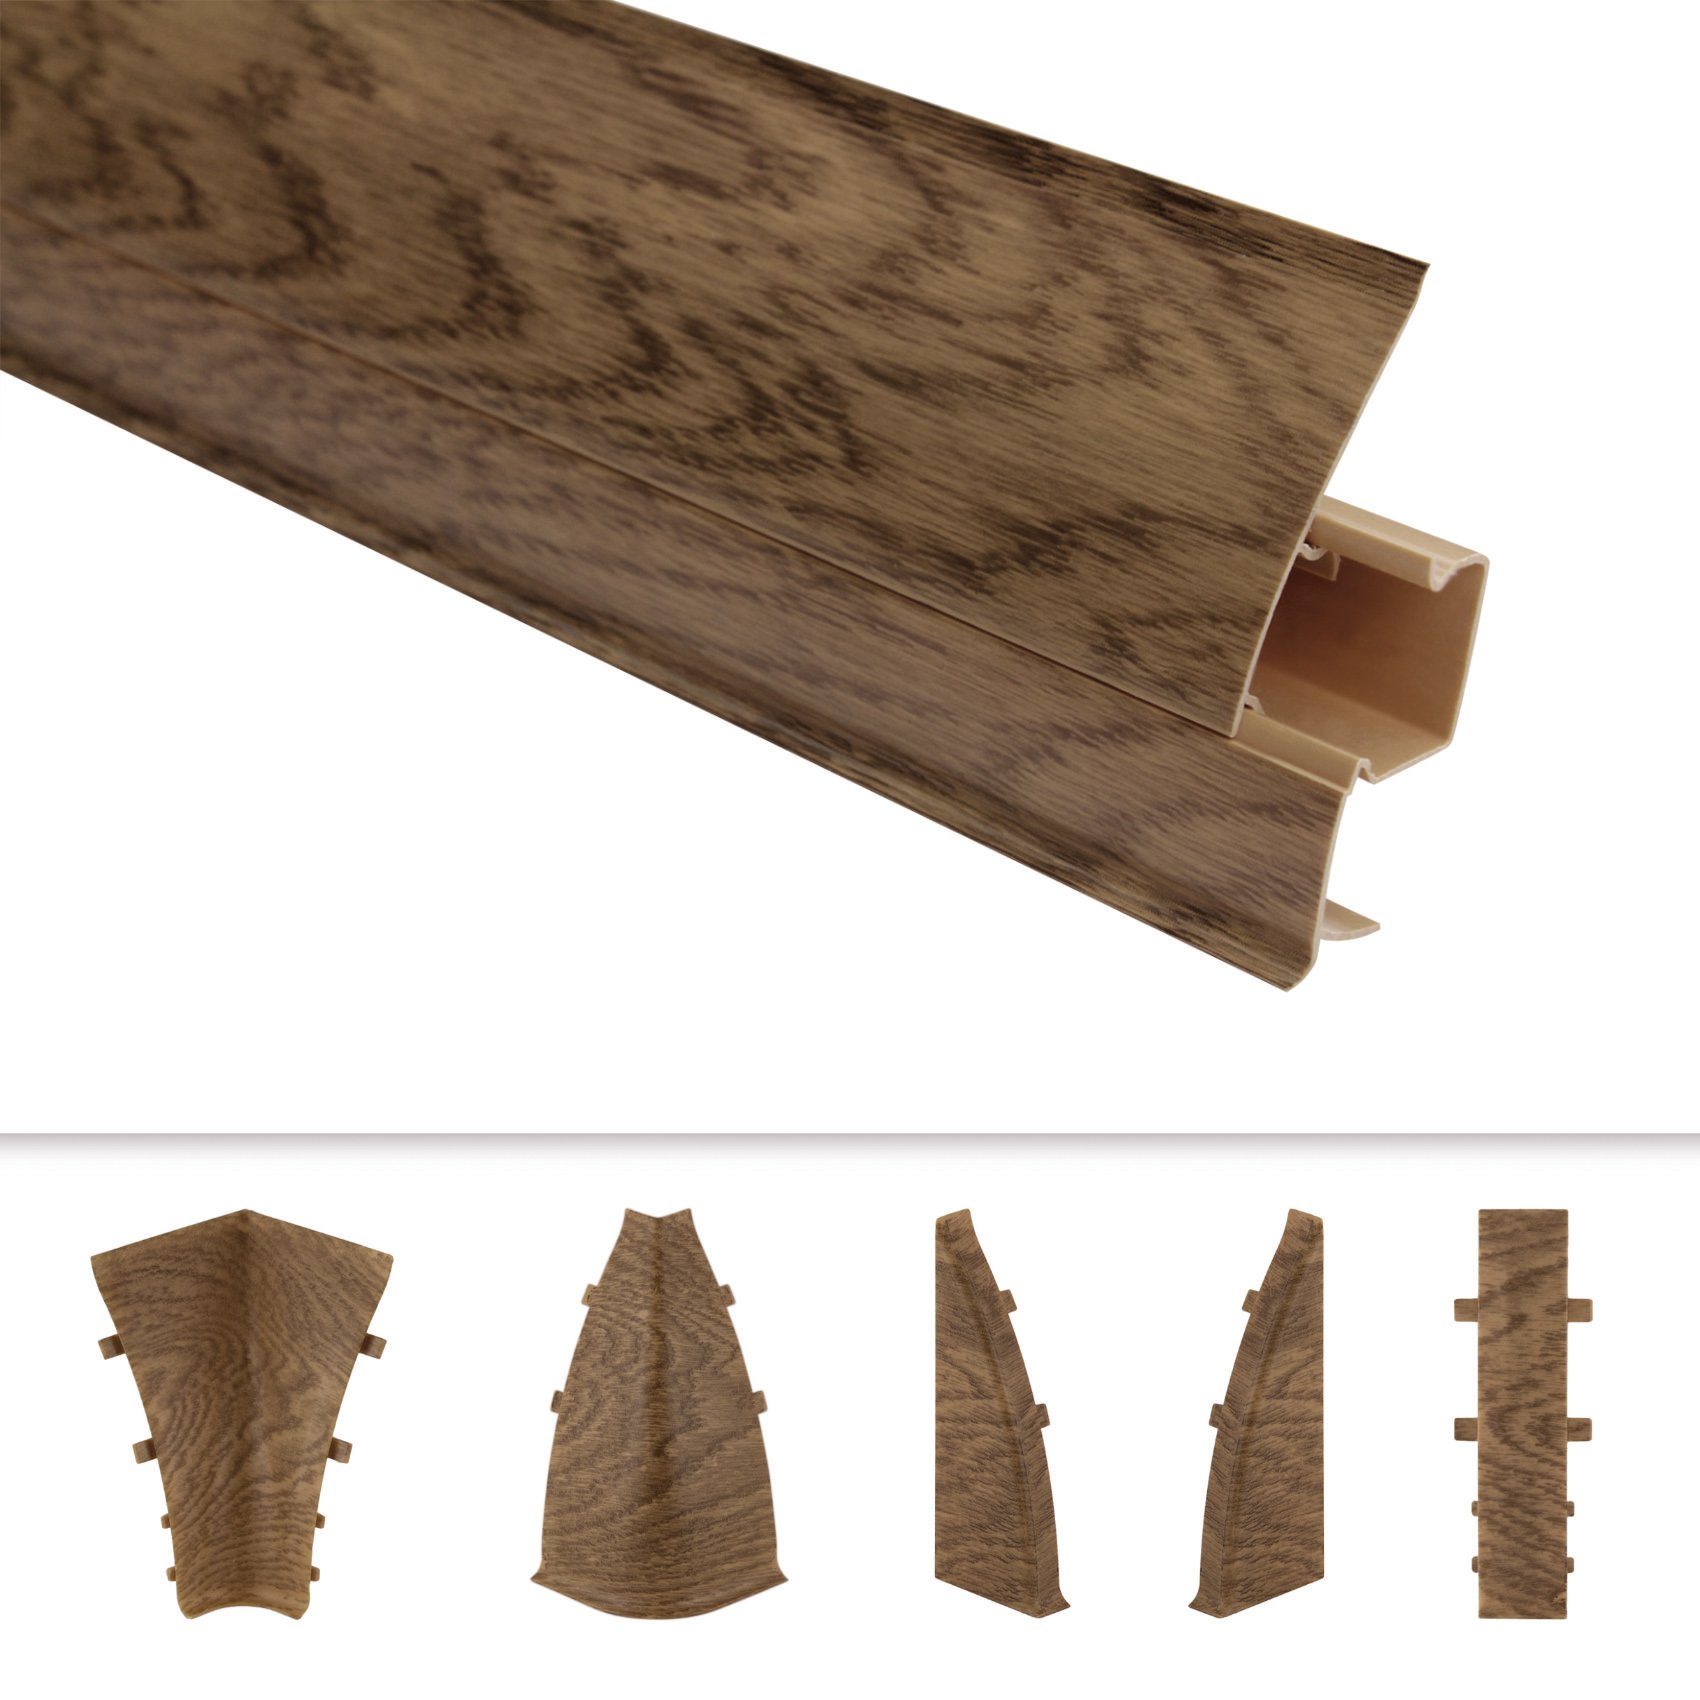 Lemal Sockelleiste, PVC Fußleisten 70x50mm mit Kabelkanal - (Innenecke) Boden Vinylboden Holzboden